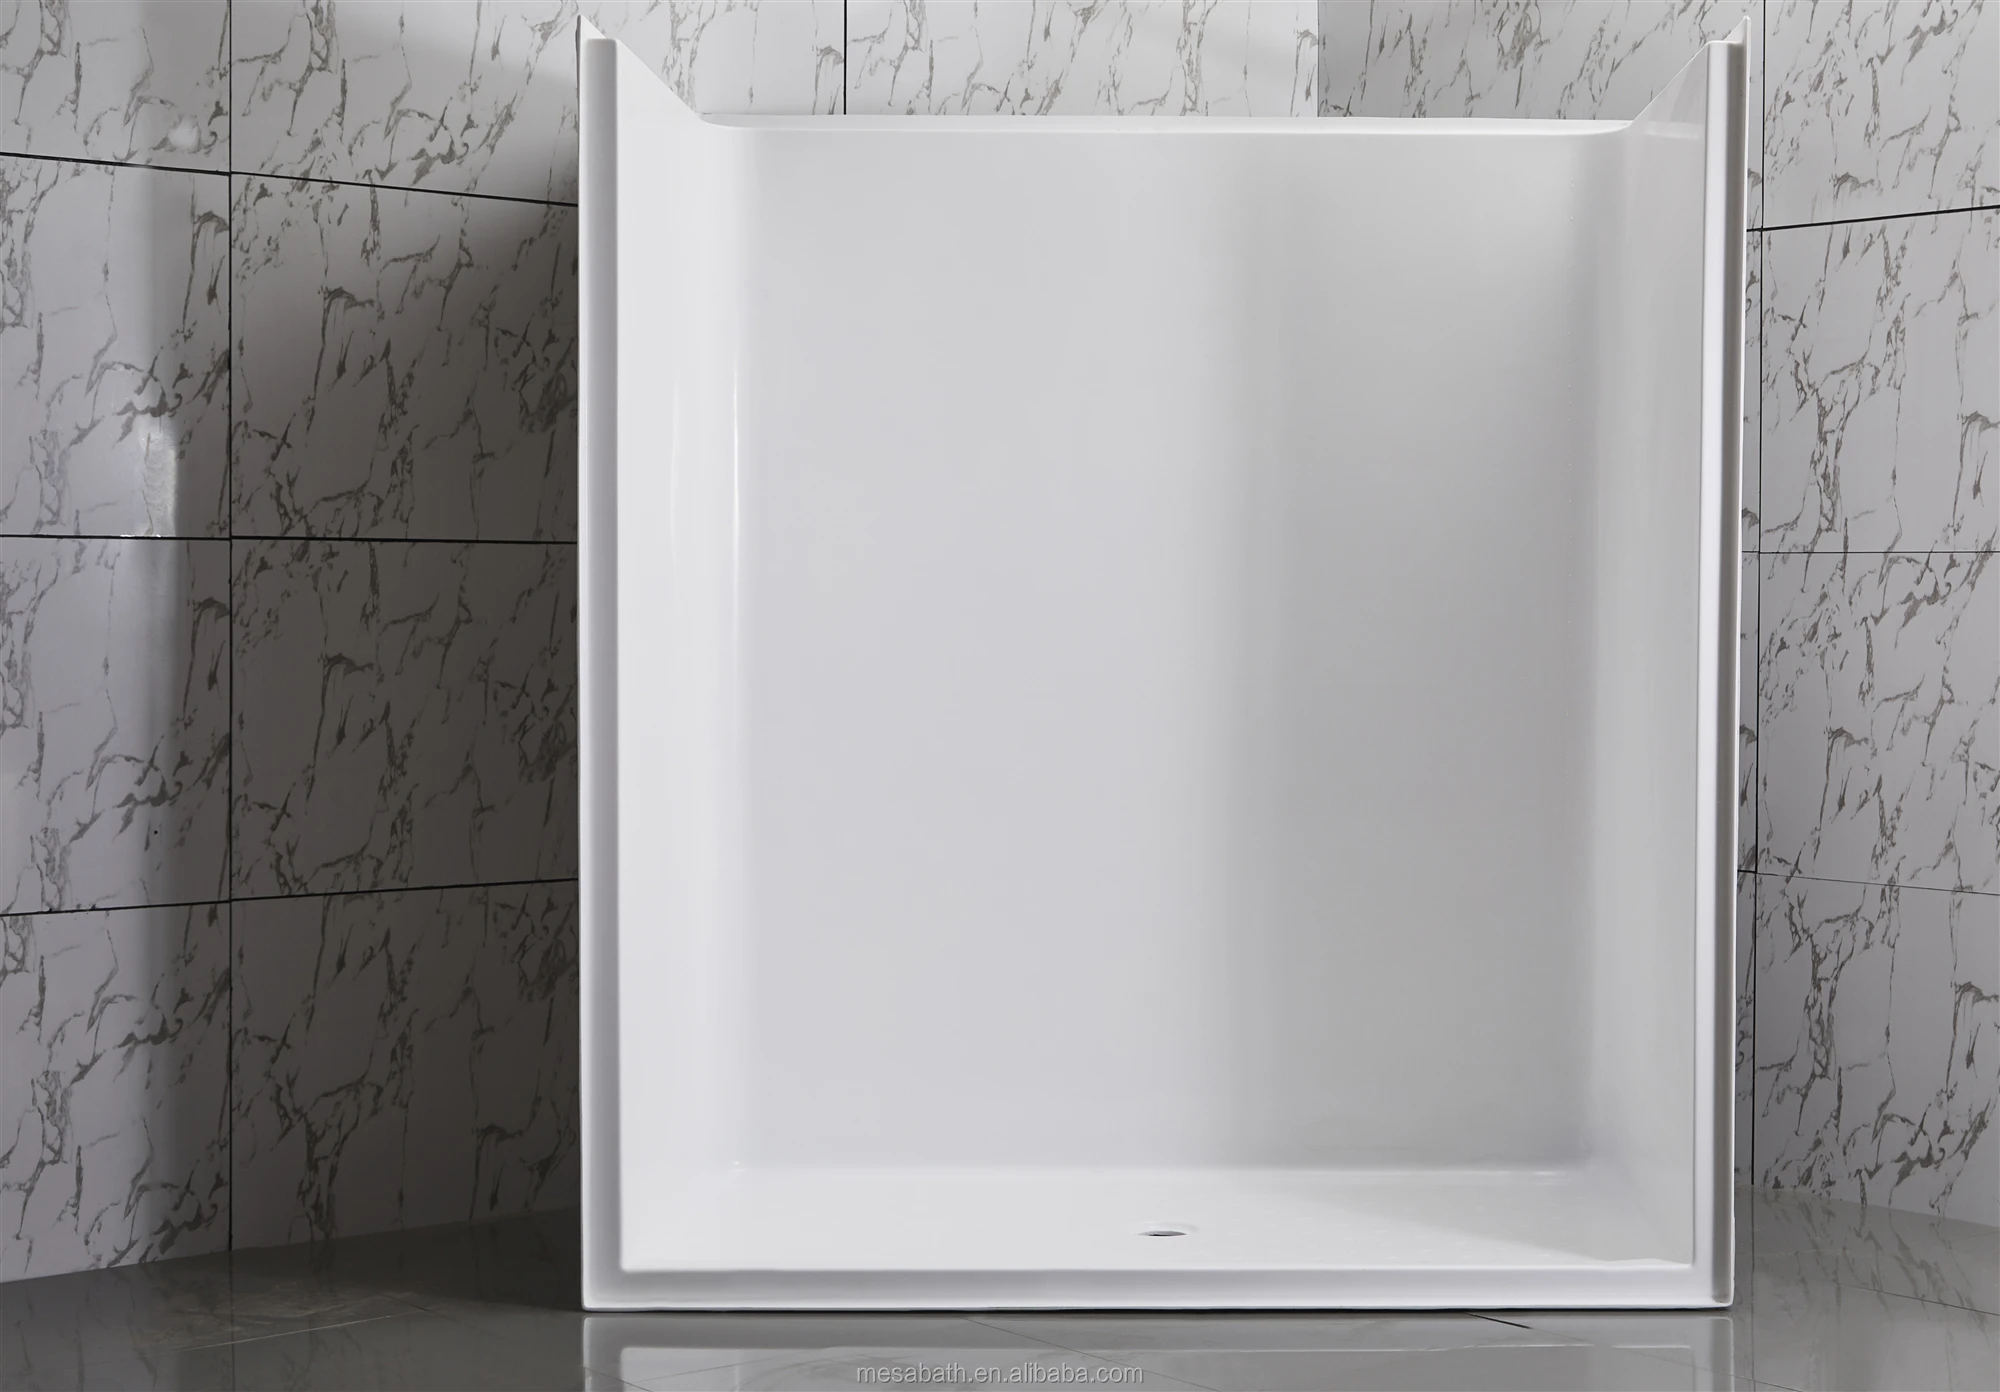 Bathroom One Piece Fiberglass Shower Wall Stalls Kit Inserts - Buy One